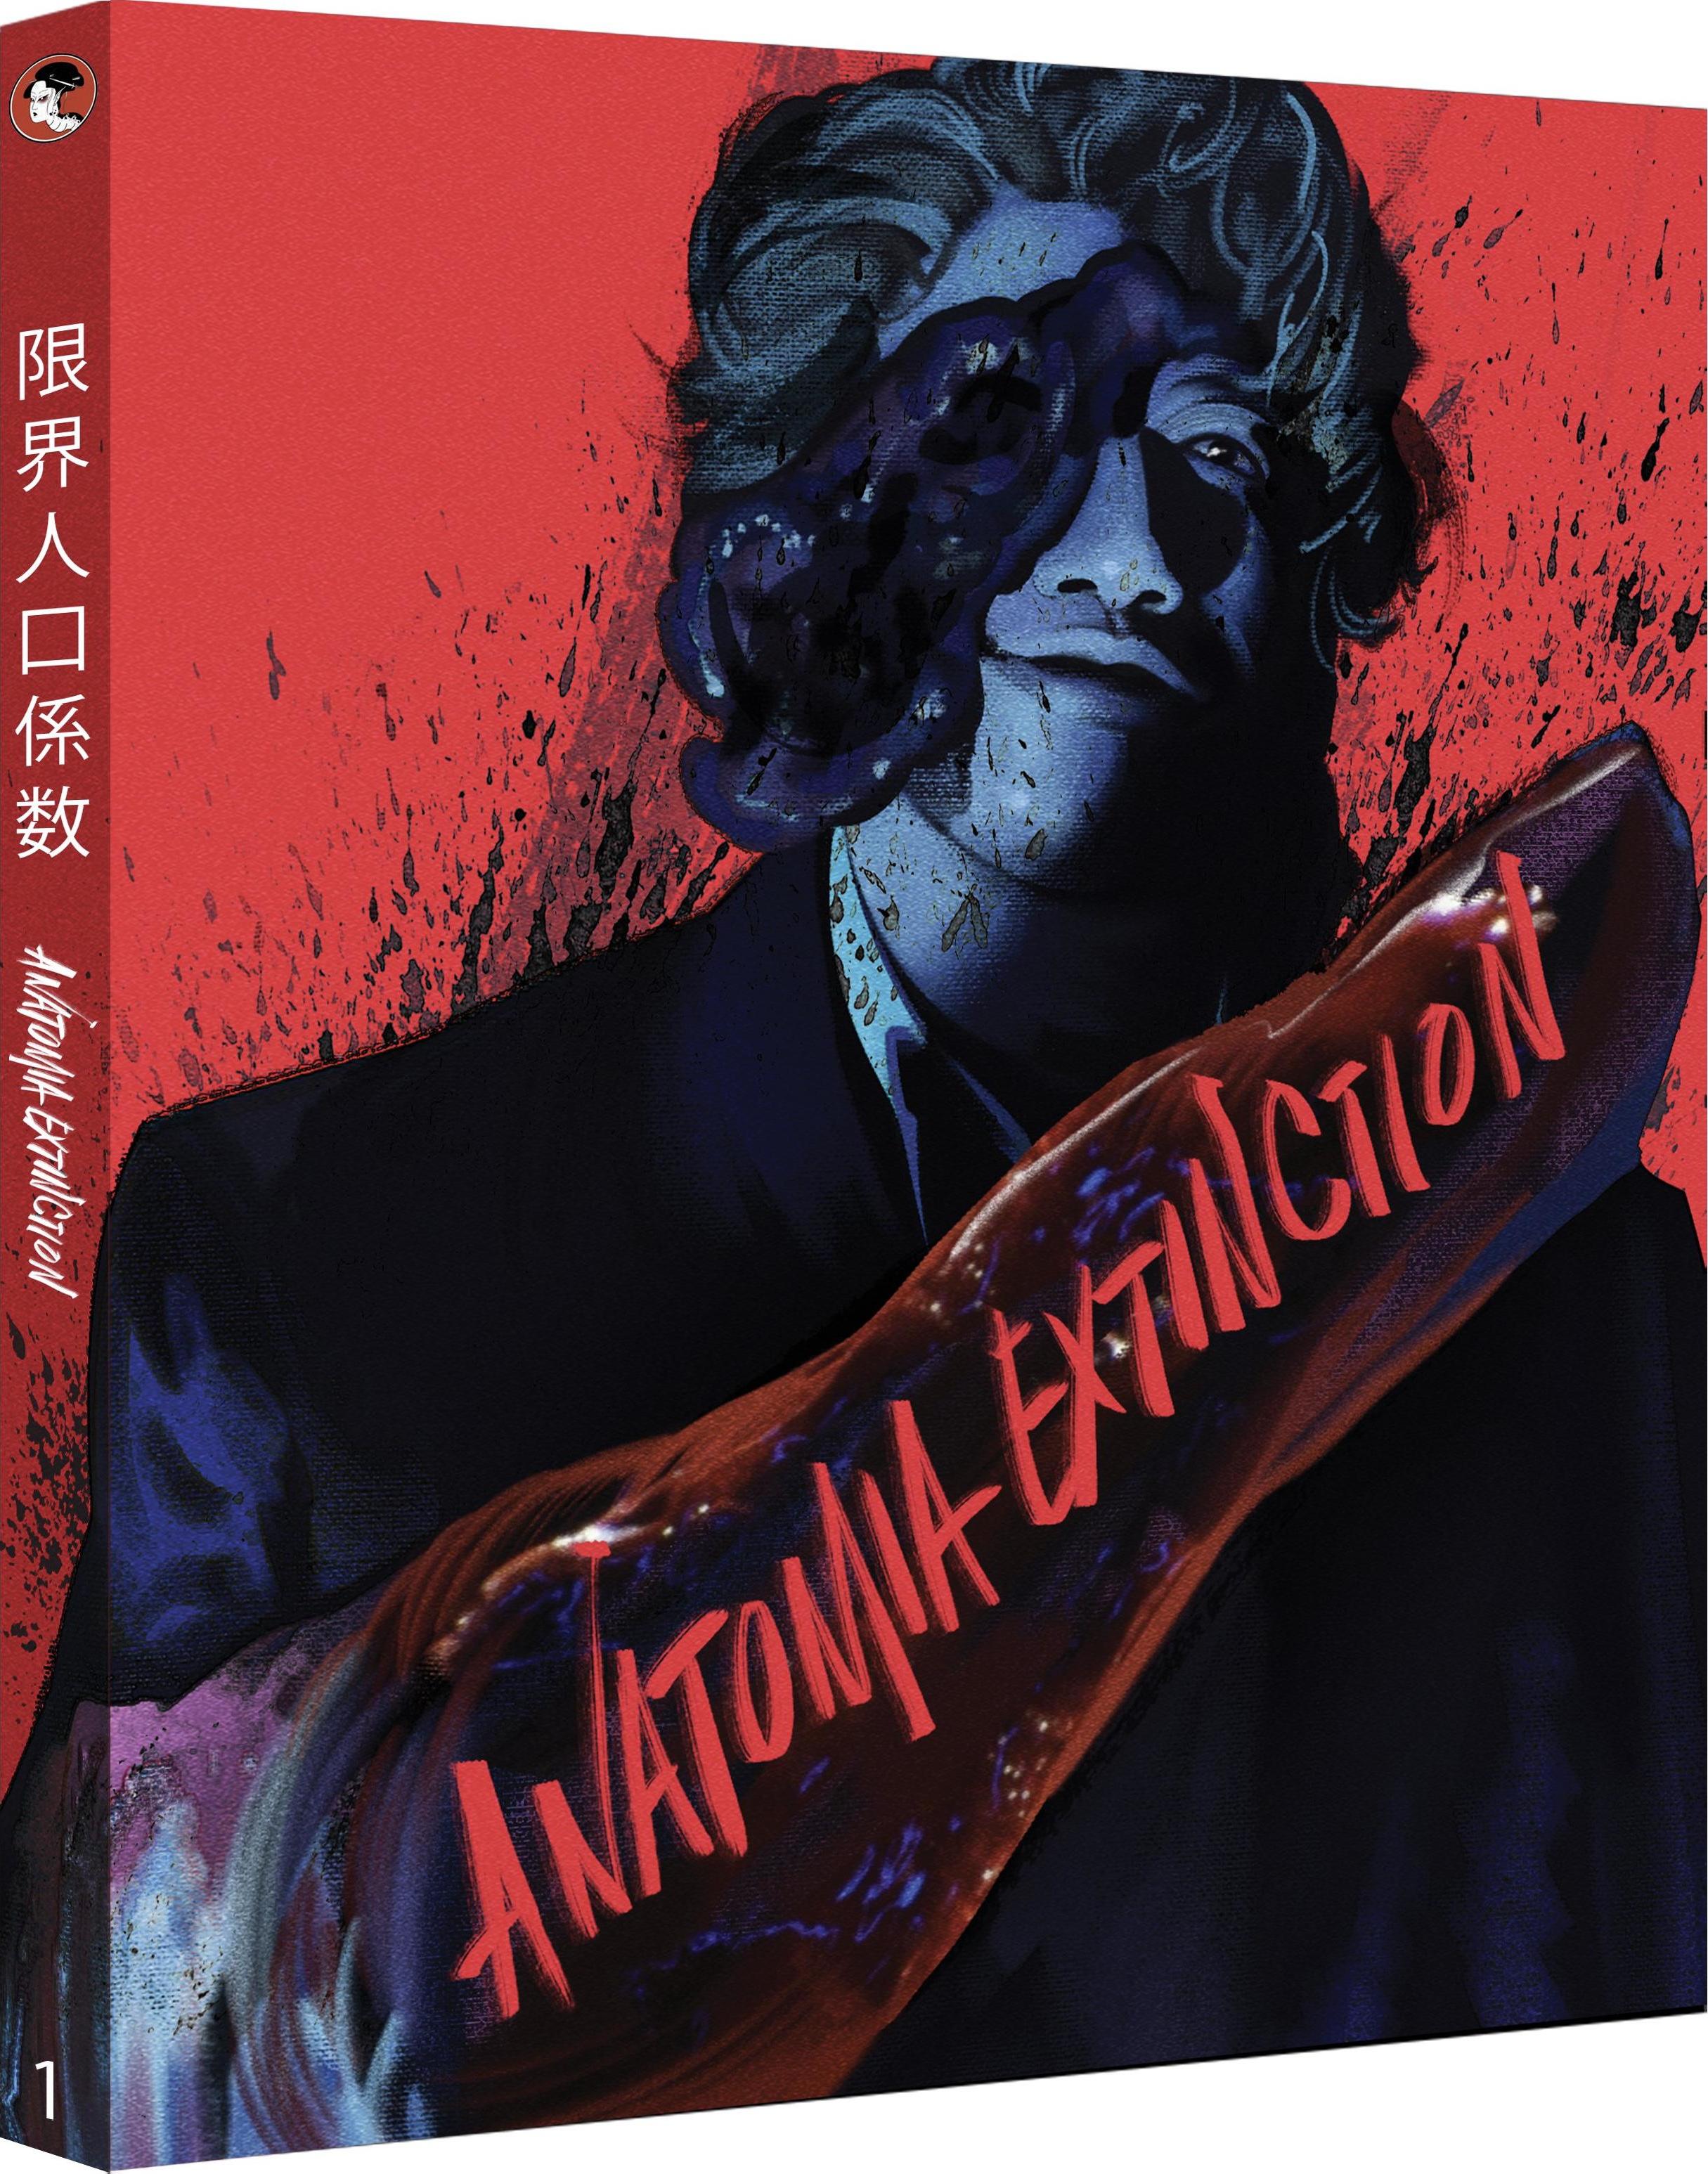 Anatomia Extinction Blu-ray (Error 4444 Exclusive / Limited to 